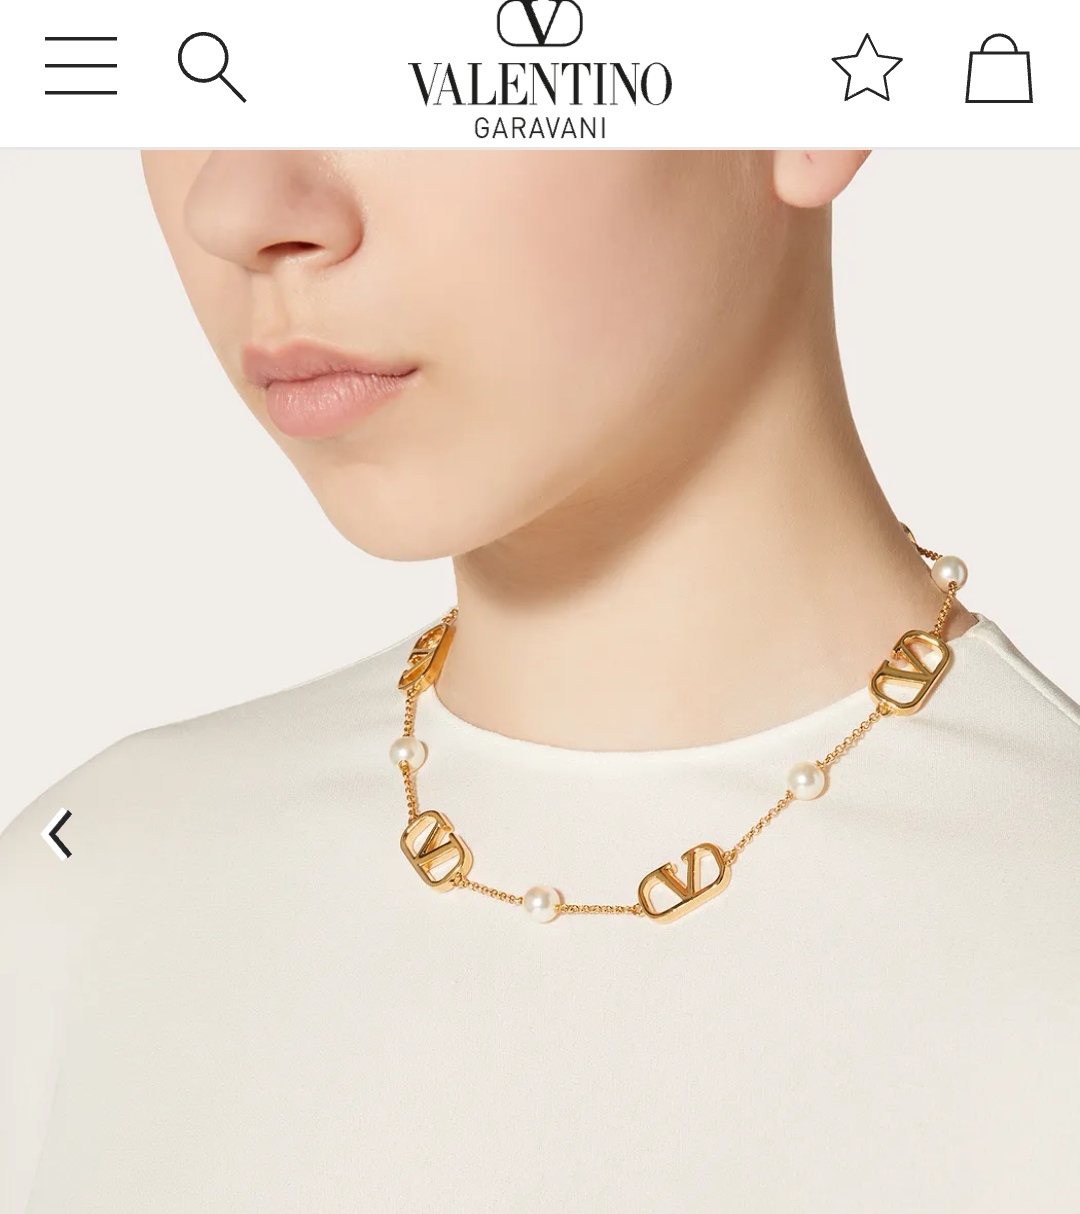 Valentino necklace